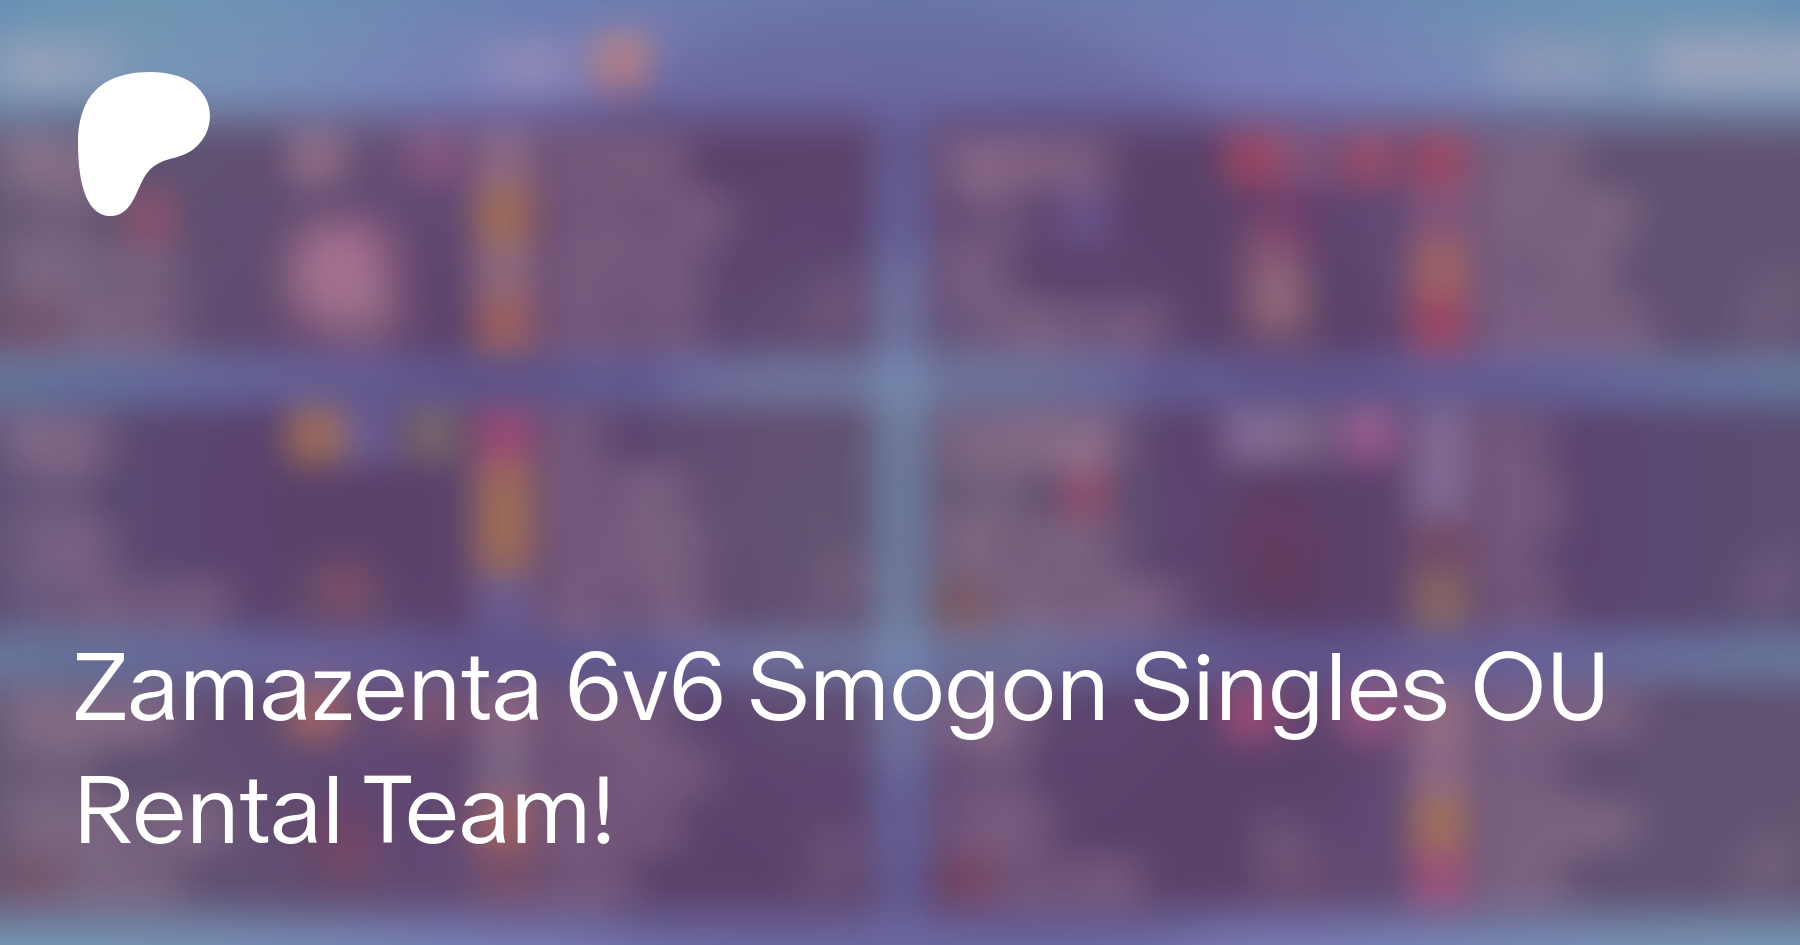 Zamazenta 6v6 Smogon Singles OU Rental Team!